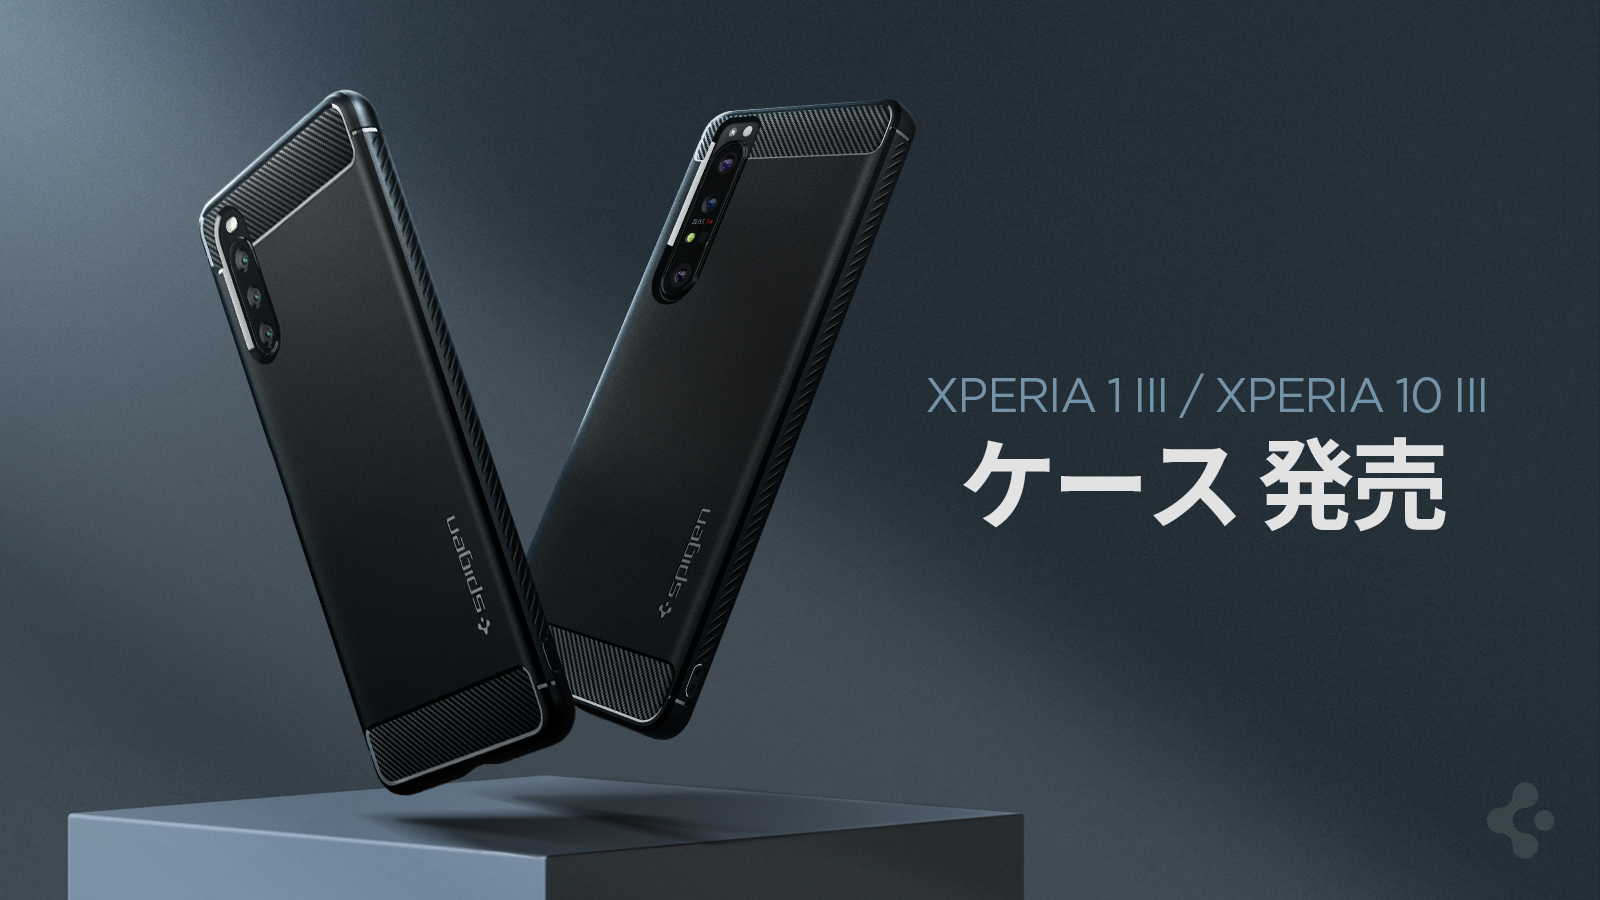 Spigen Sony Xperia 1 Iii Xperia 10 Iii アクセサリー発売 発売記念 Amazonにて割引クーポン配布中 Spigen Korea Co Ltd のプレスリリース